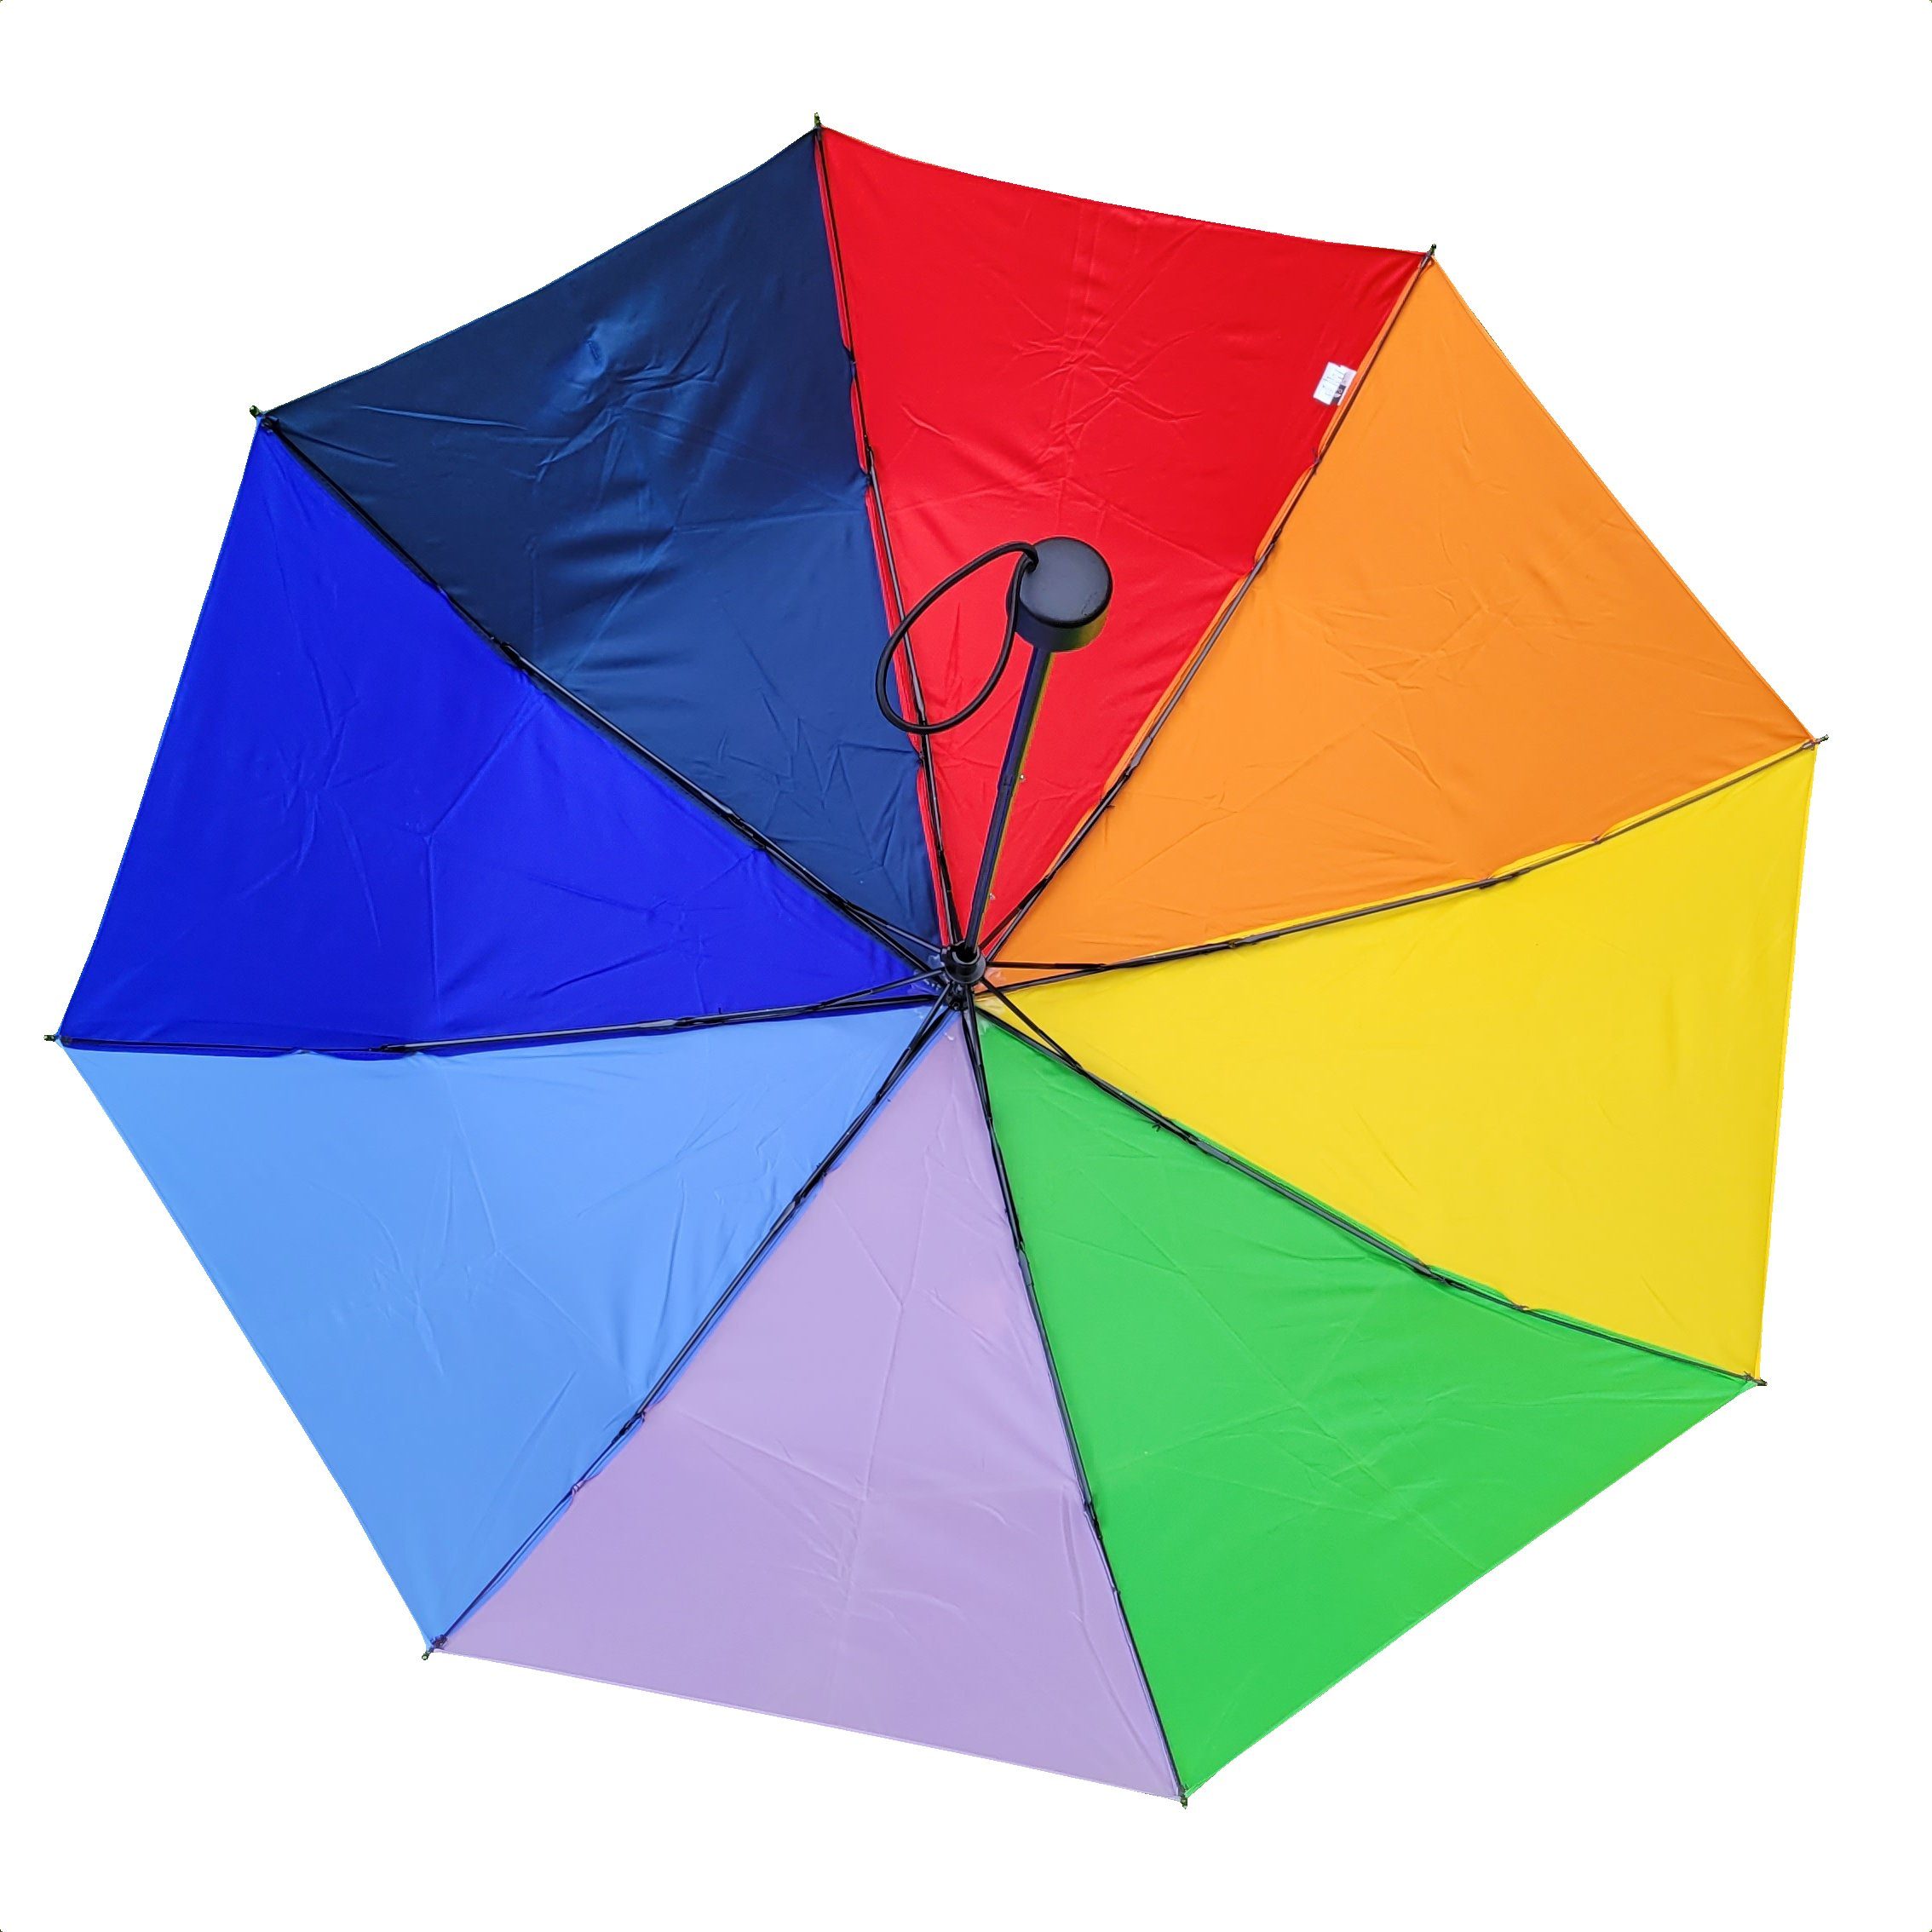 kompakter Dr. in Regenschirm Regenbogen-Farben Taschenregenschirm kleiner, Neuser